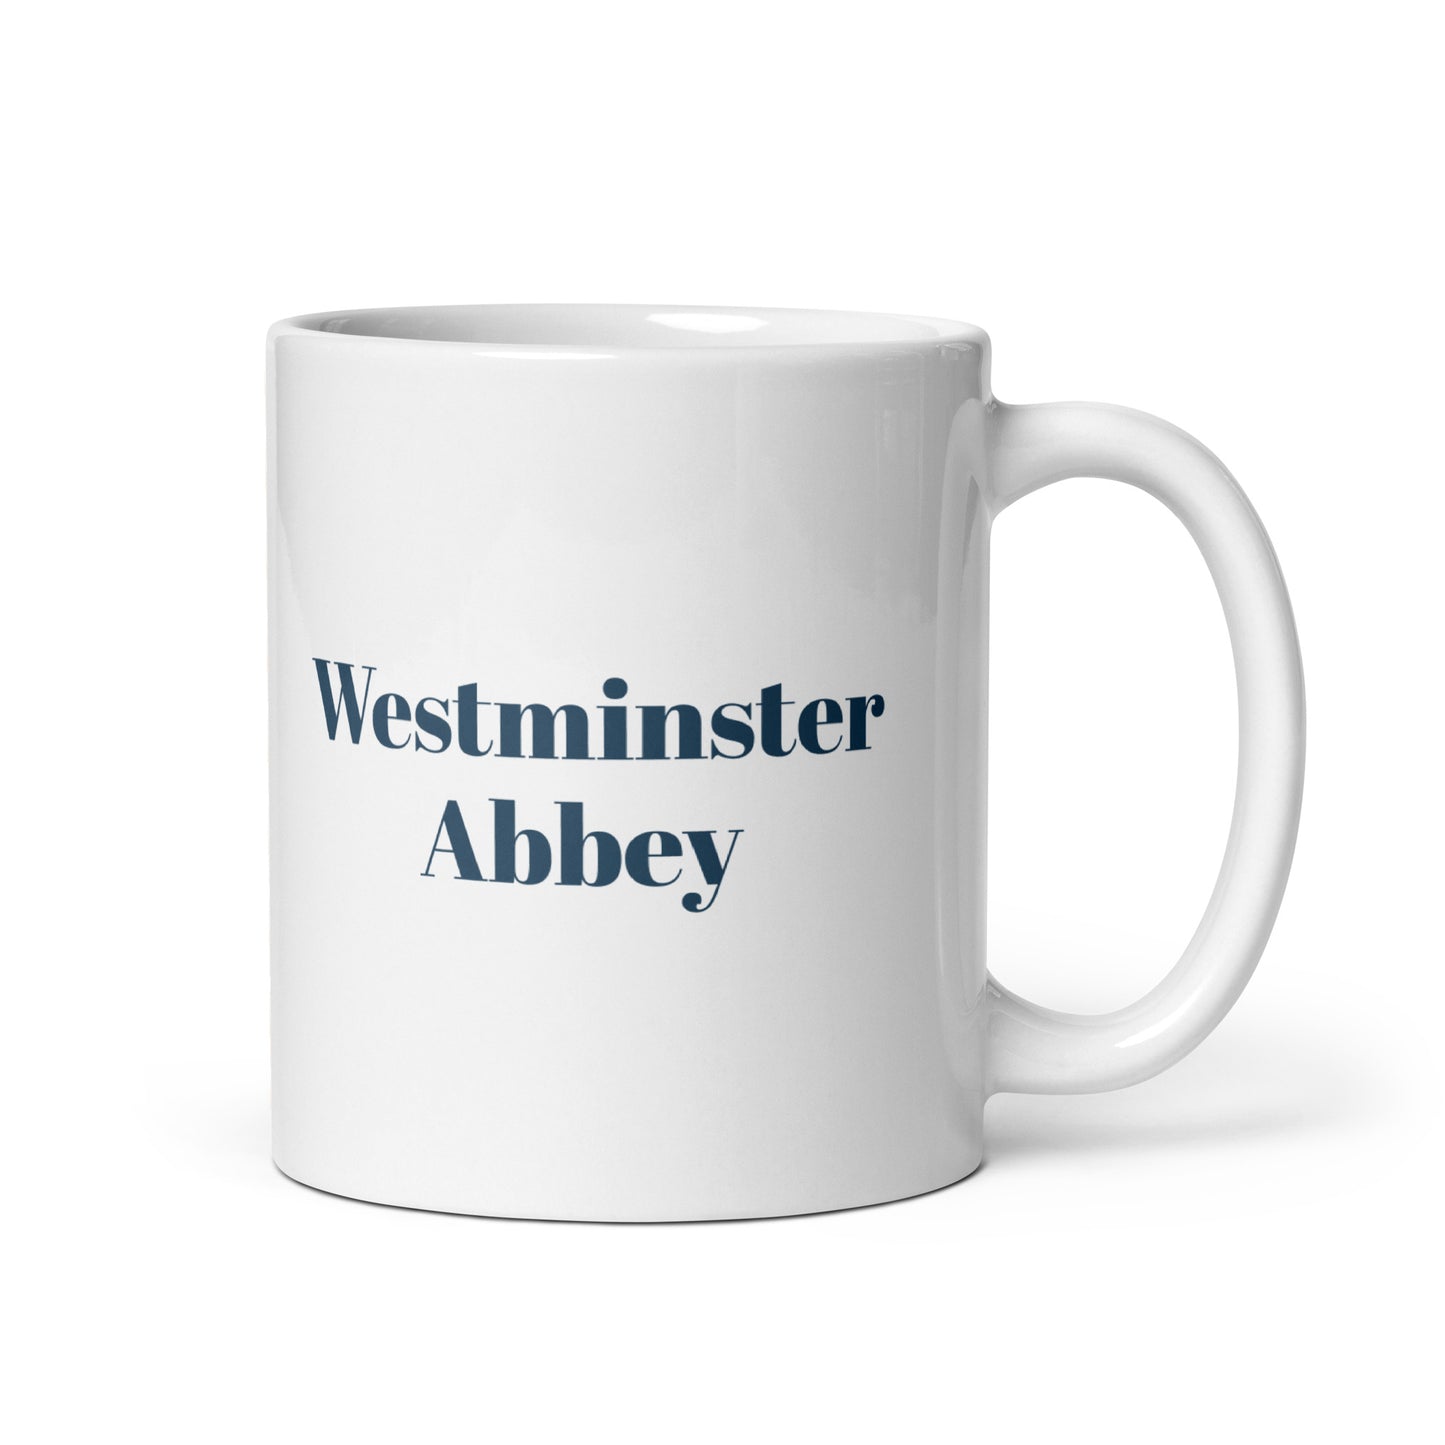 Westminster Abbey white glossy mug